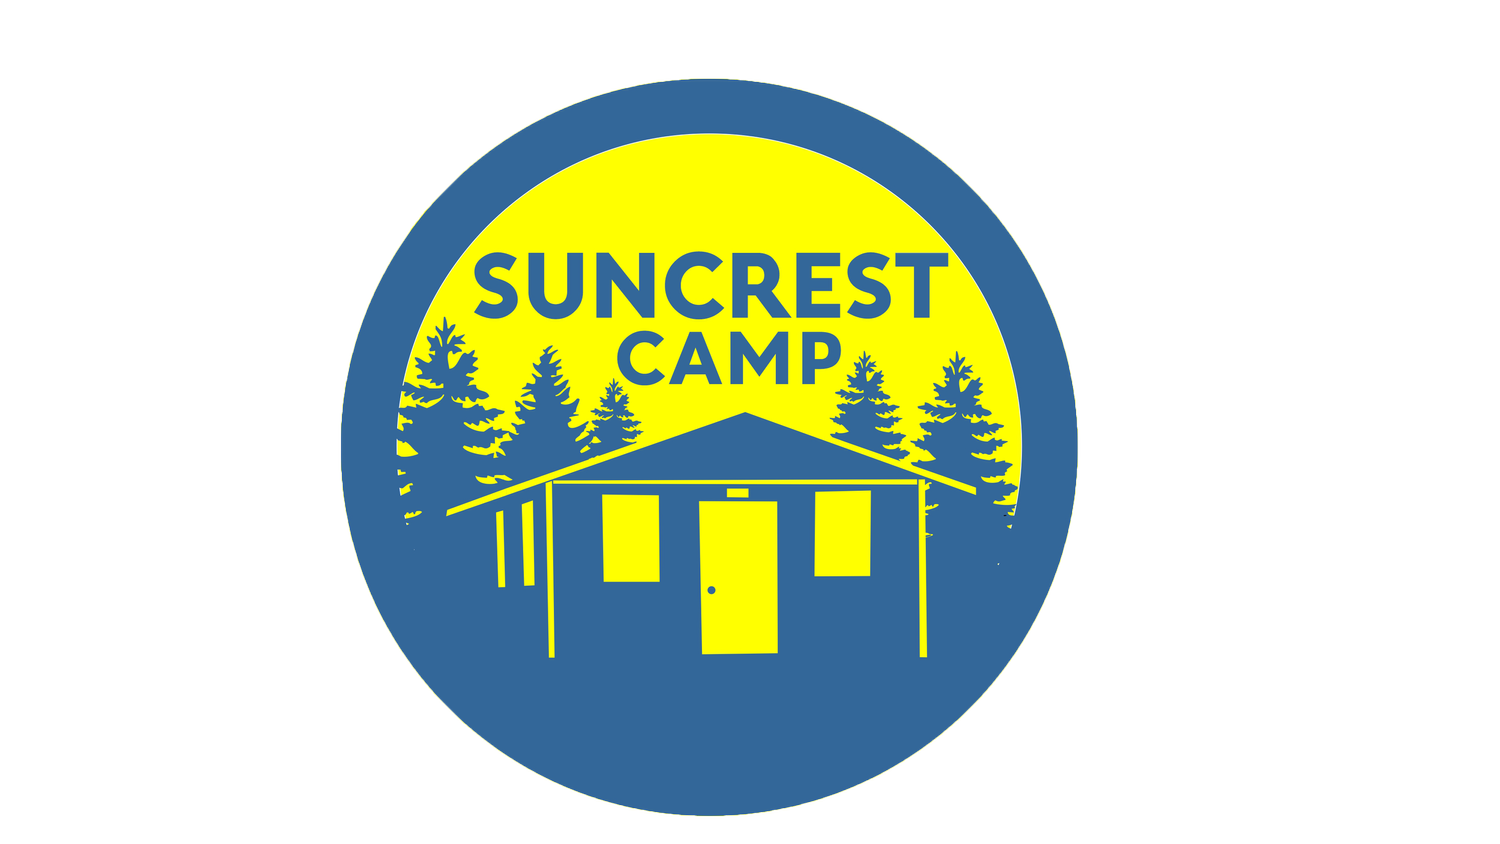 Suncrest Camp